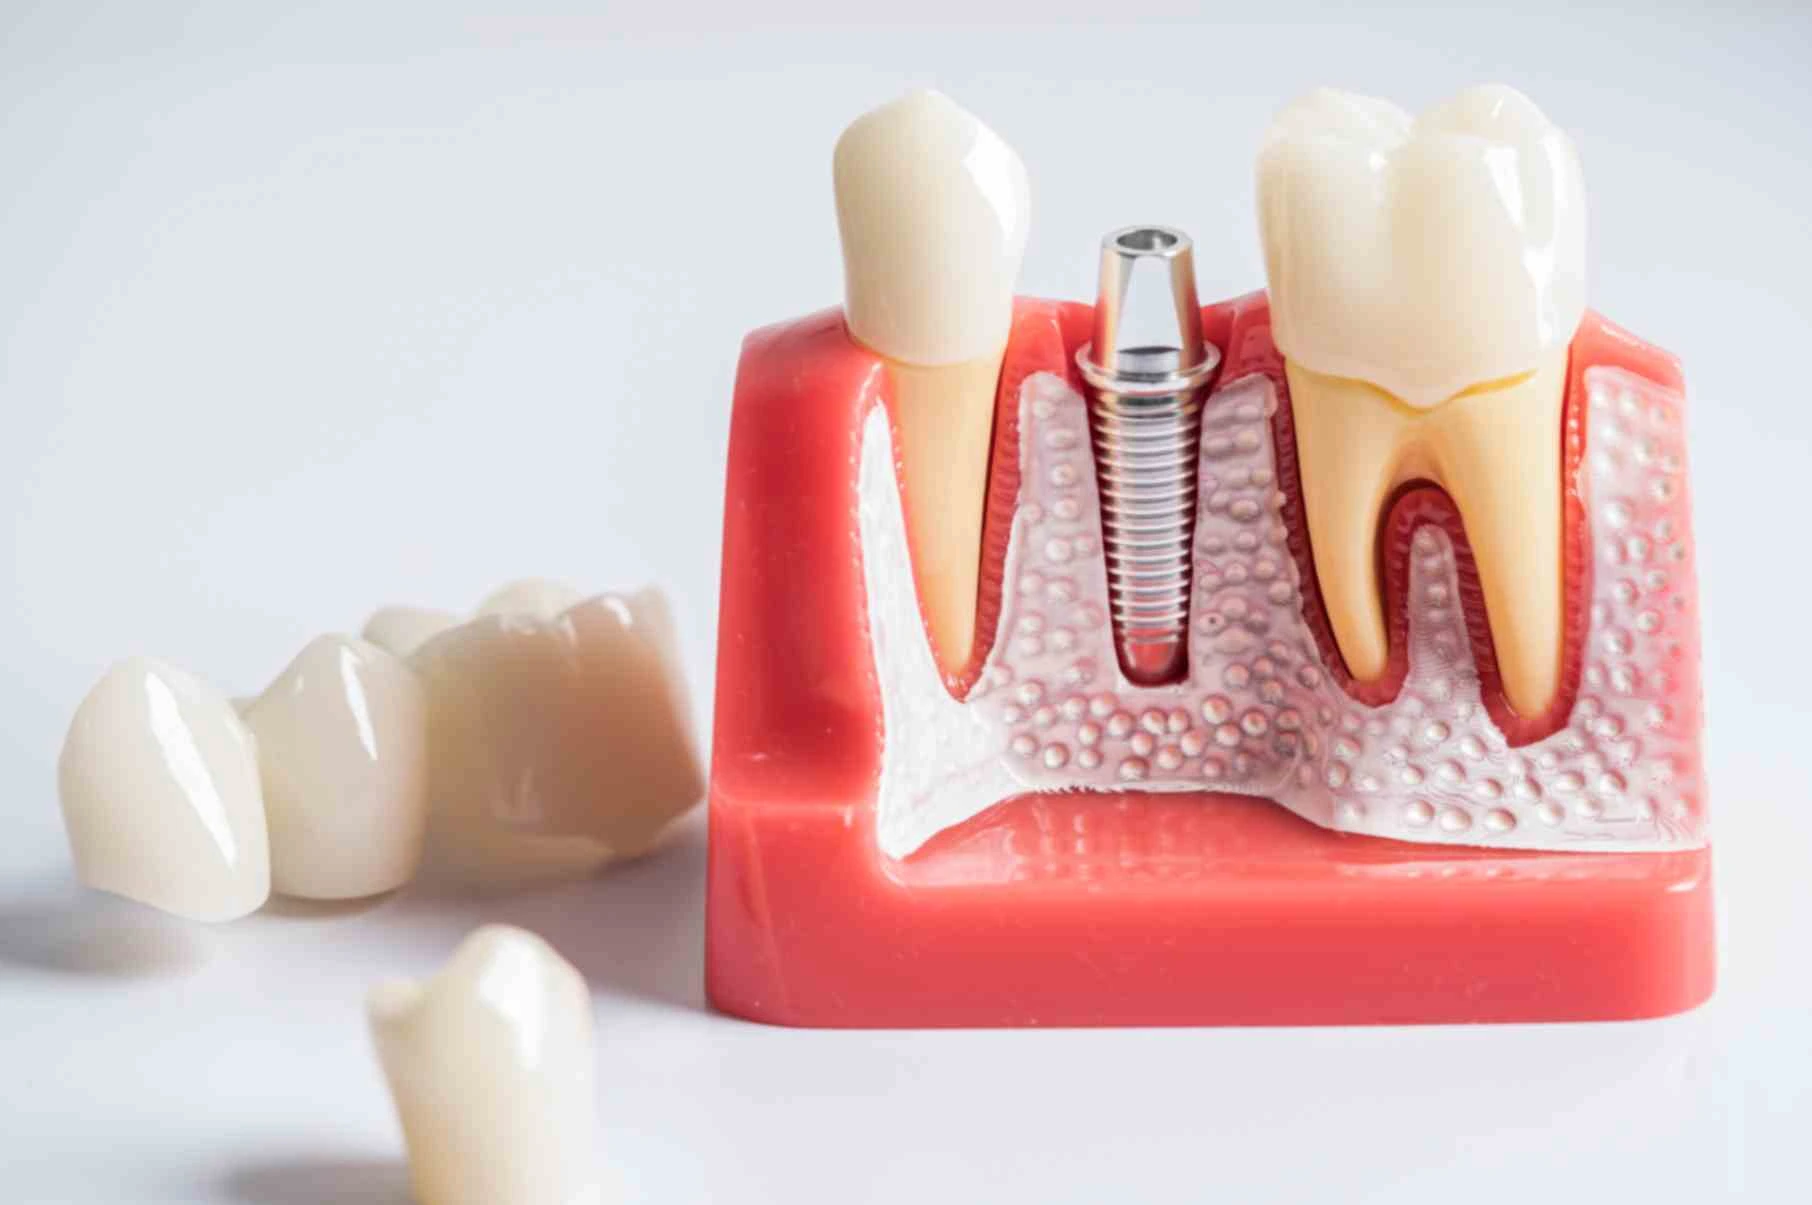 Dental implants and dentures